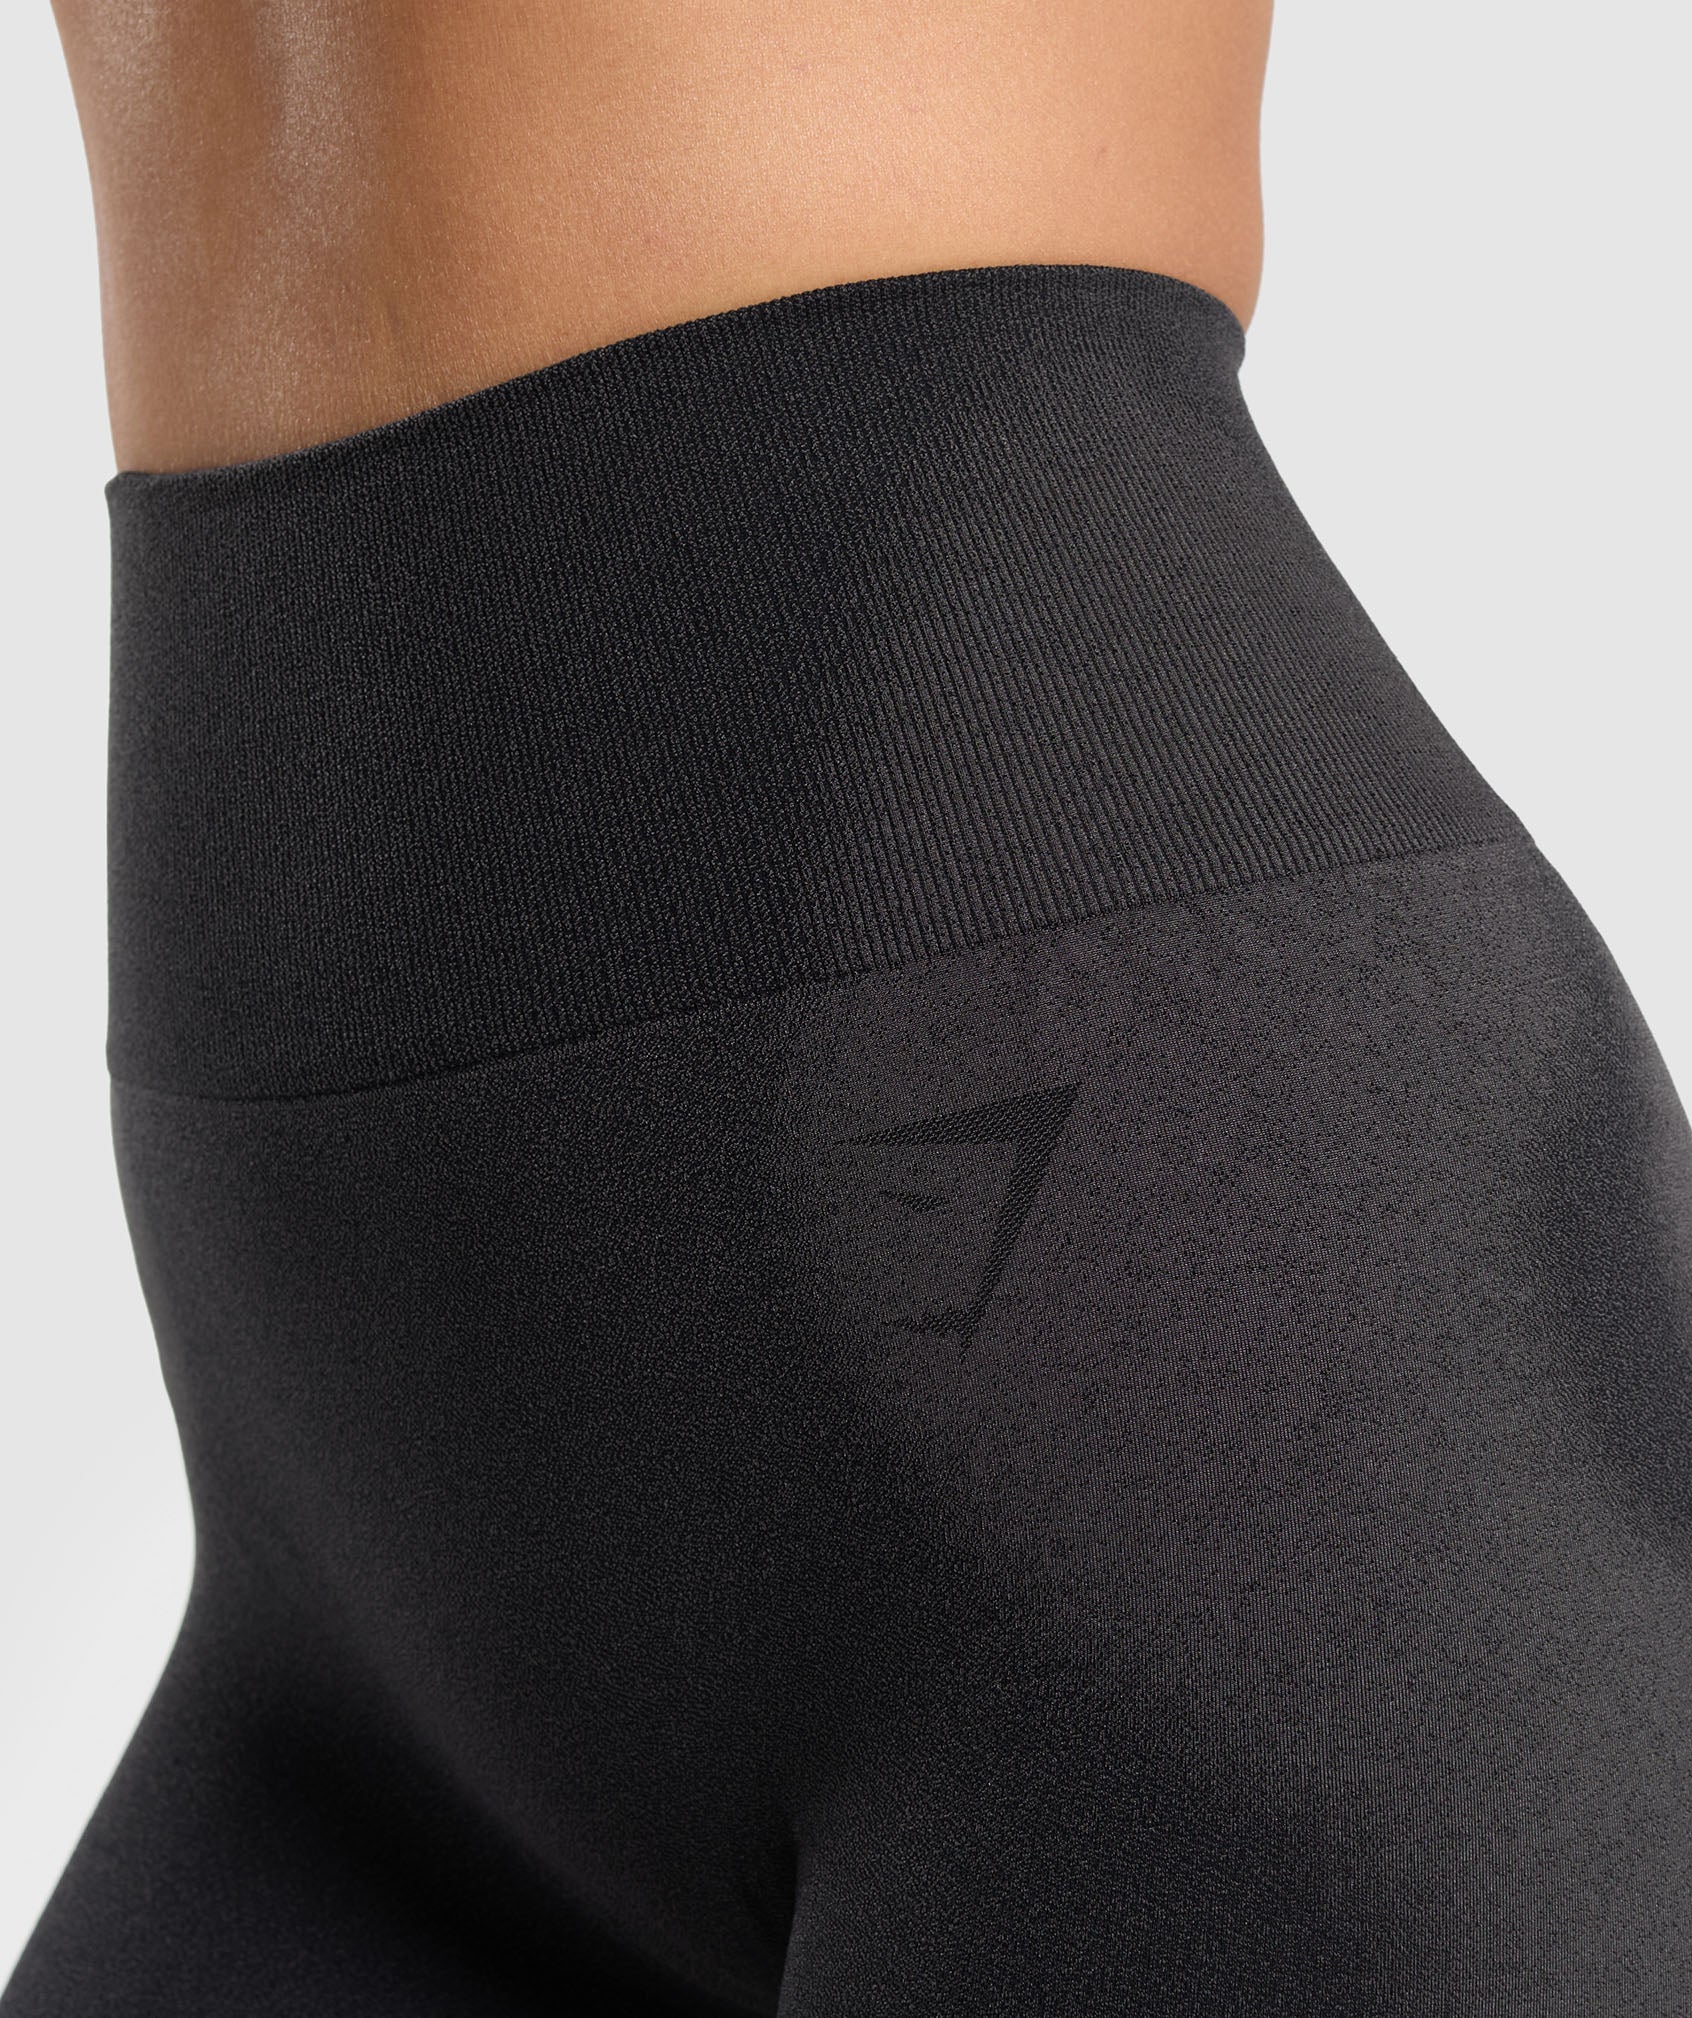 Blur Seamless Shorts in Black/Asphalt Grey - view 5